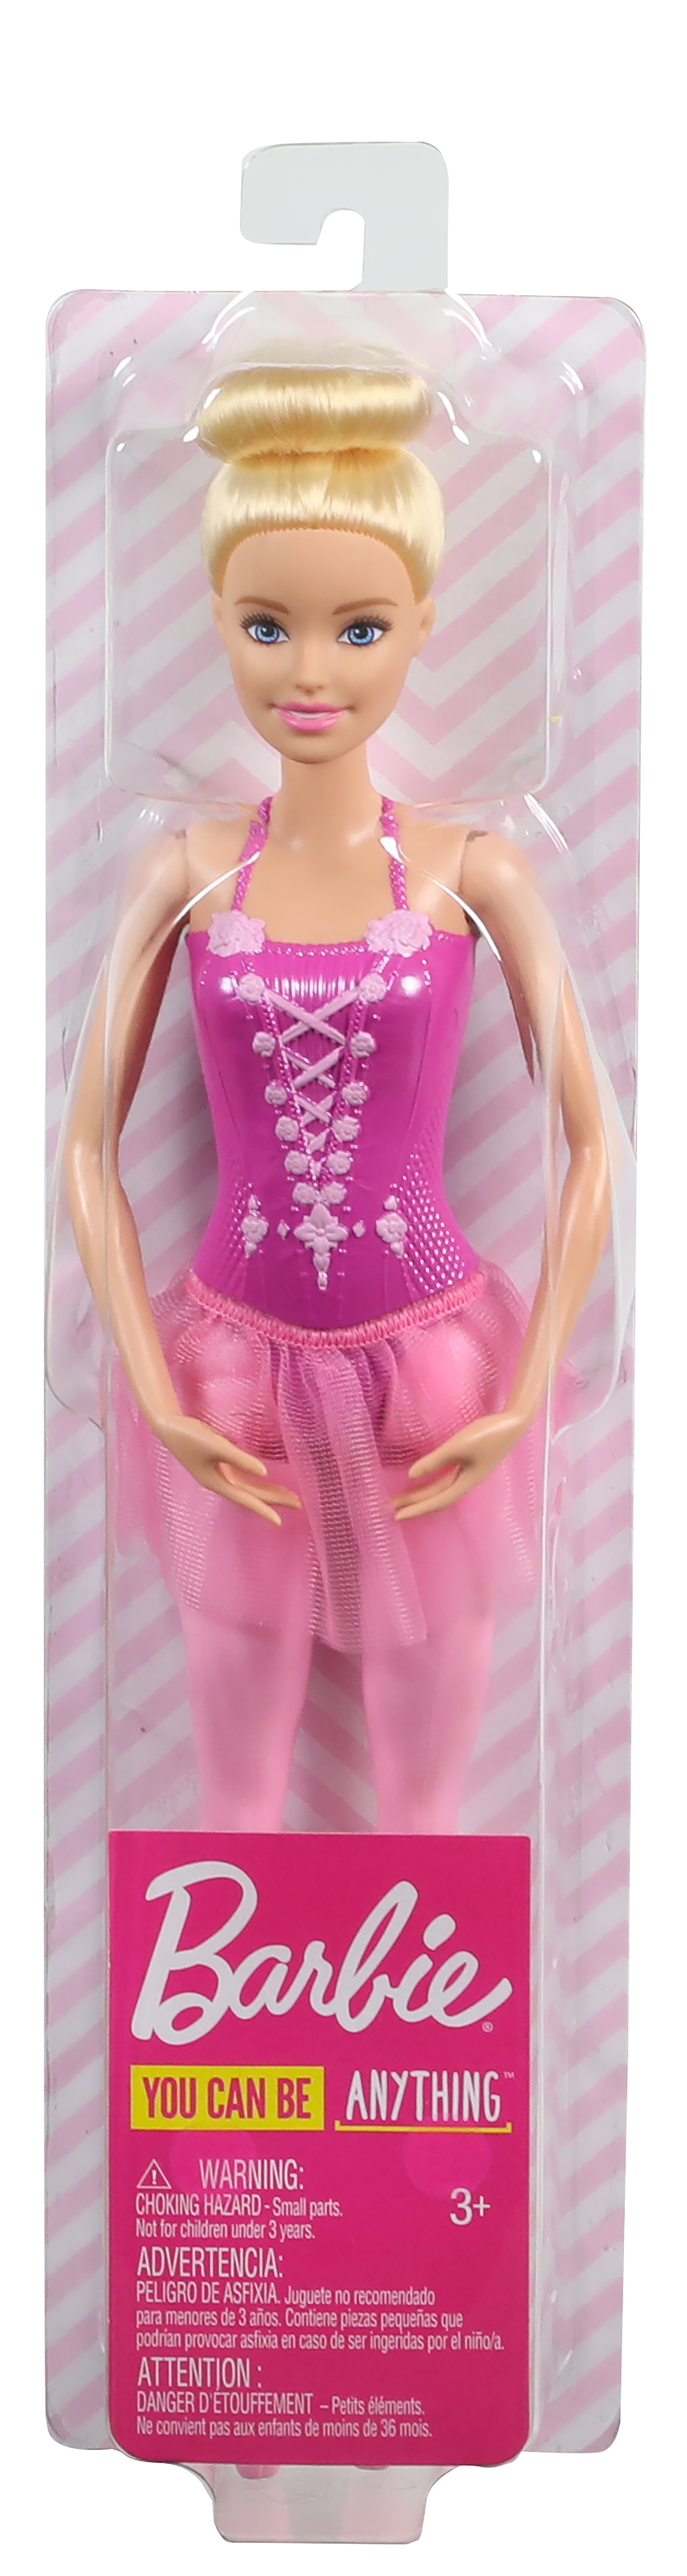 Barbie Ballerina Bionda Tutù Rosa